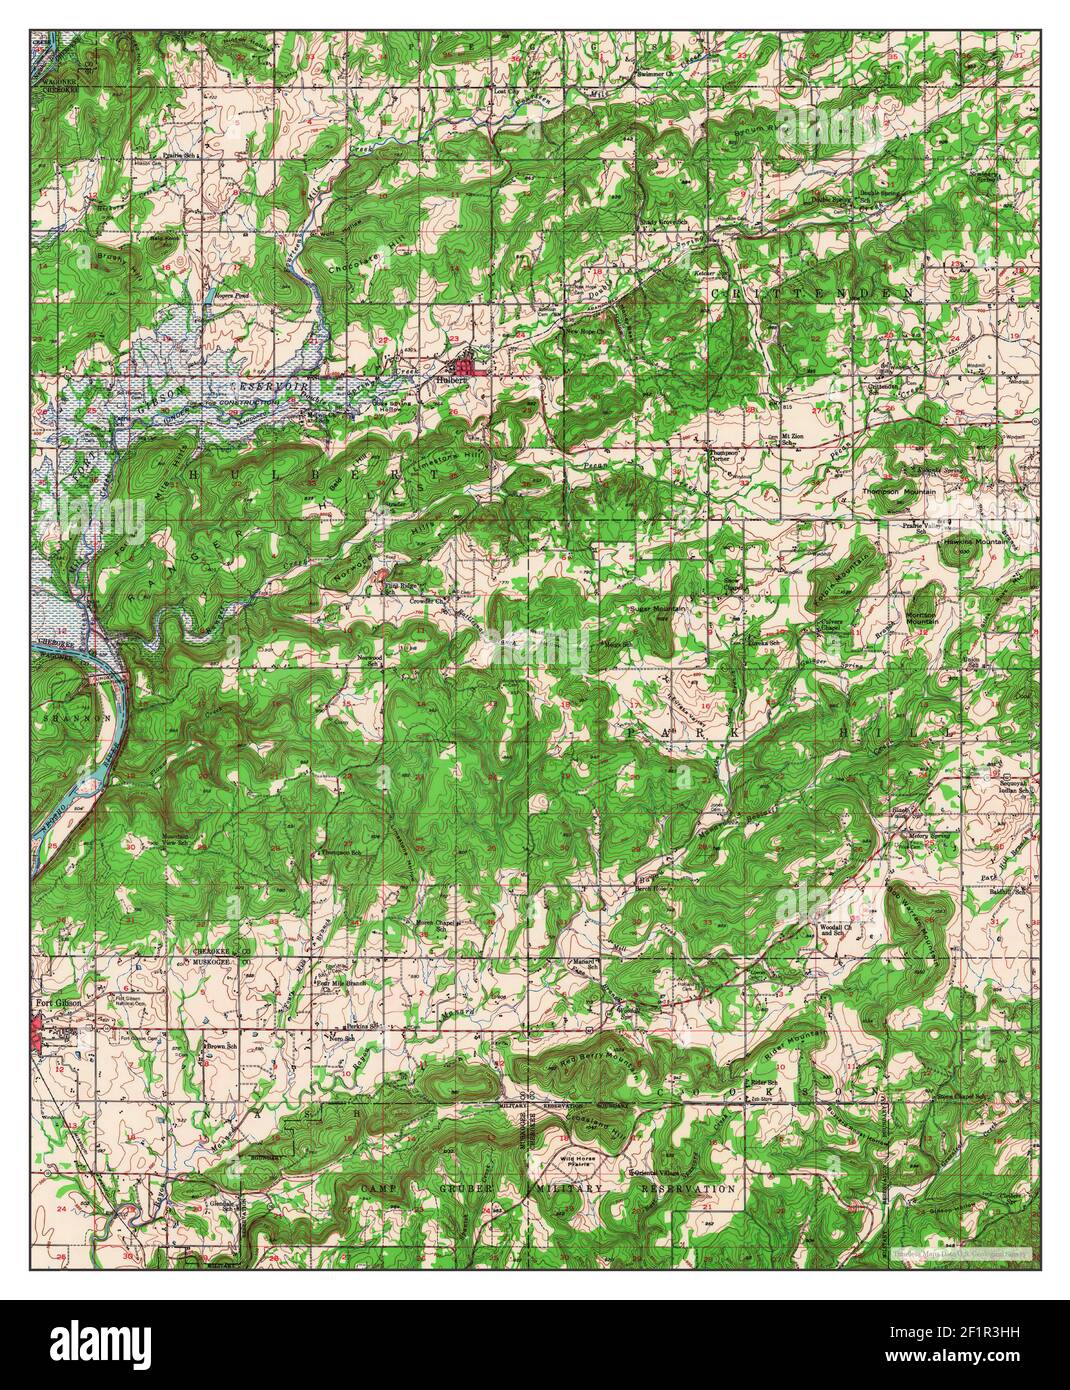 Hulbert, Oklahoma, map 1948, 1:62500, United States of America by Timeless Maps, data U.S. Geological Survey Foto Stock